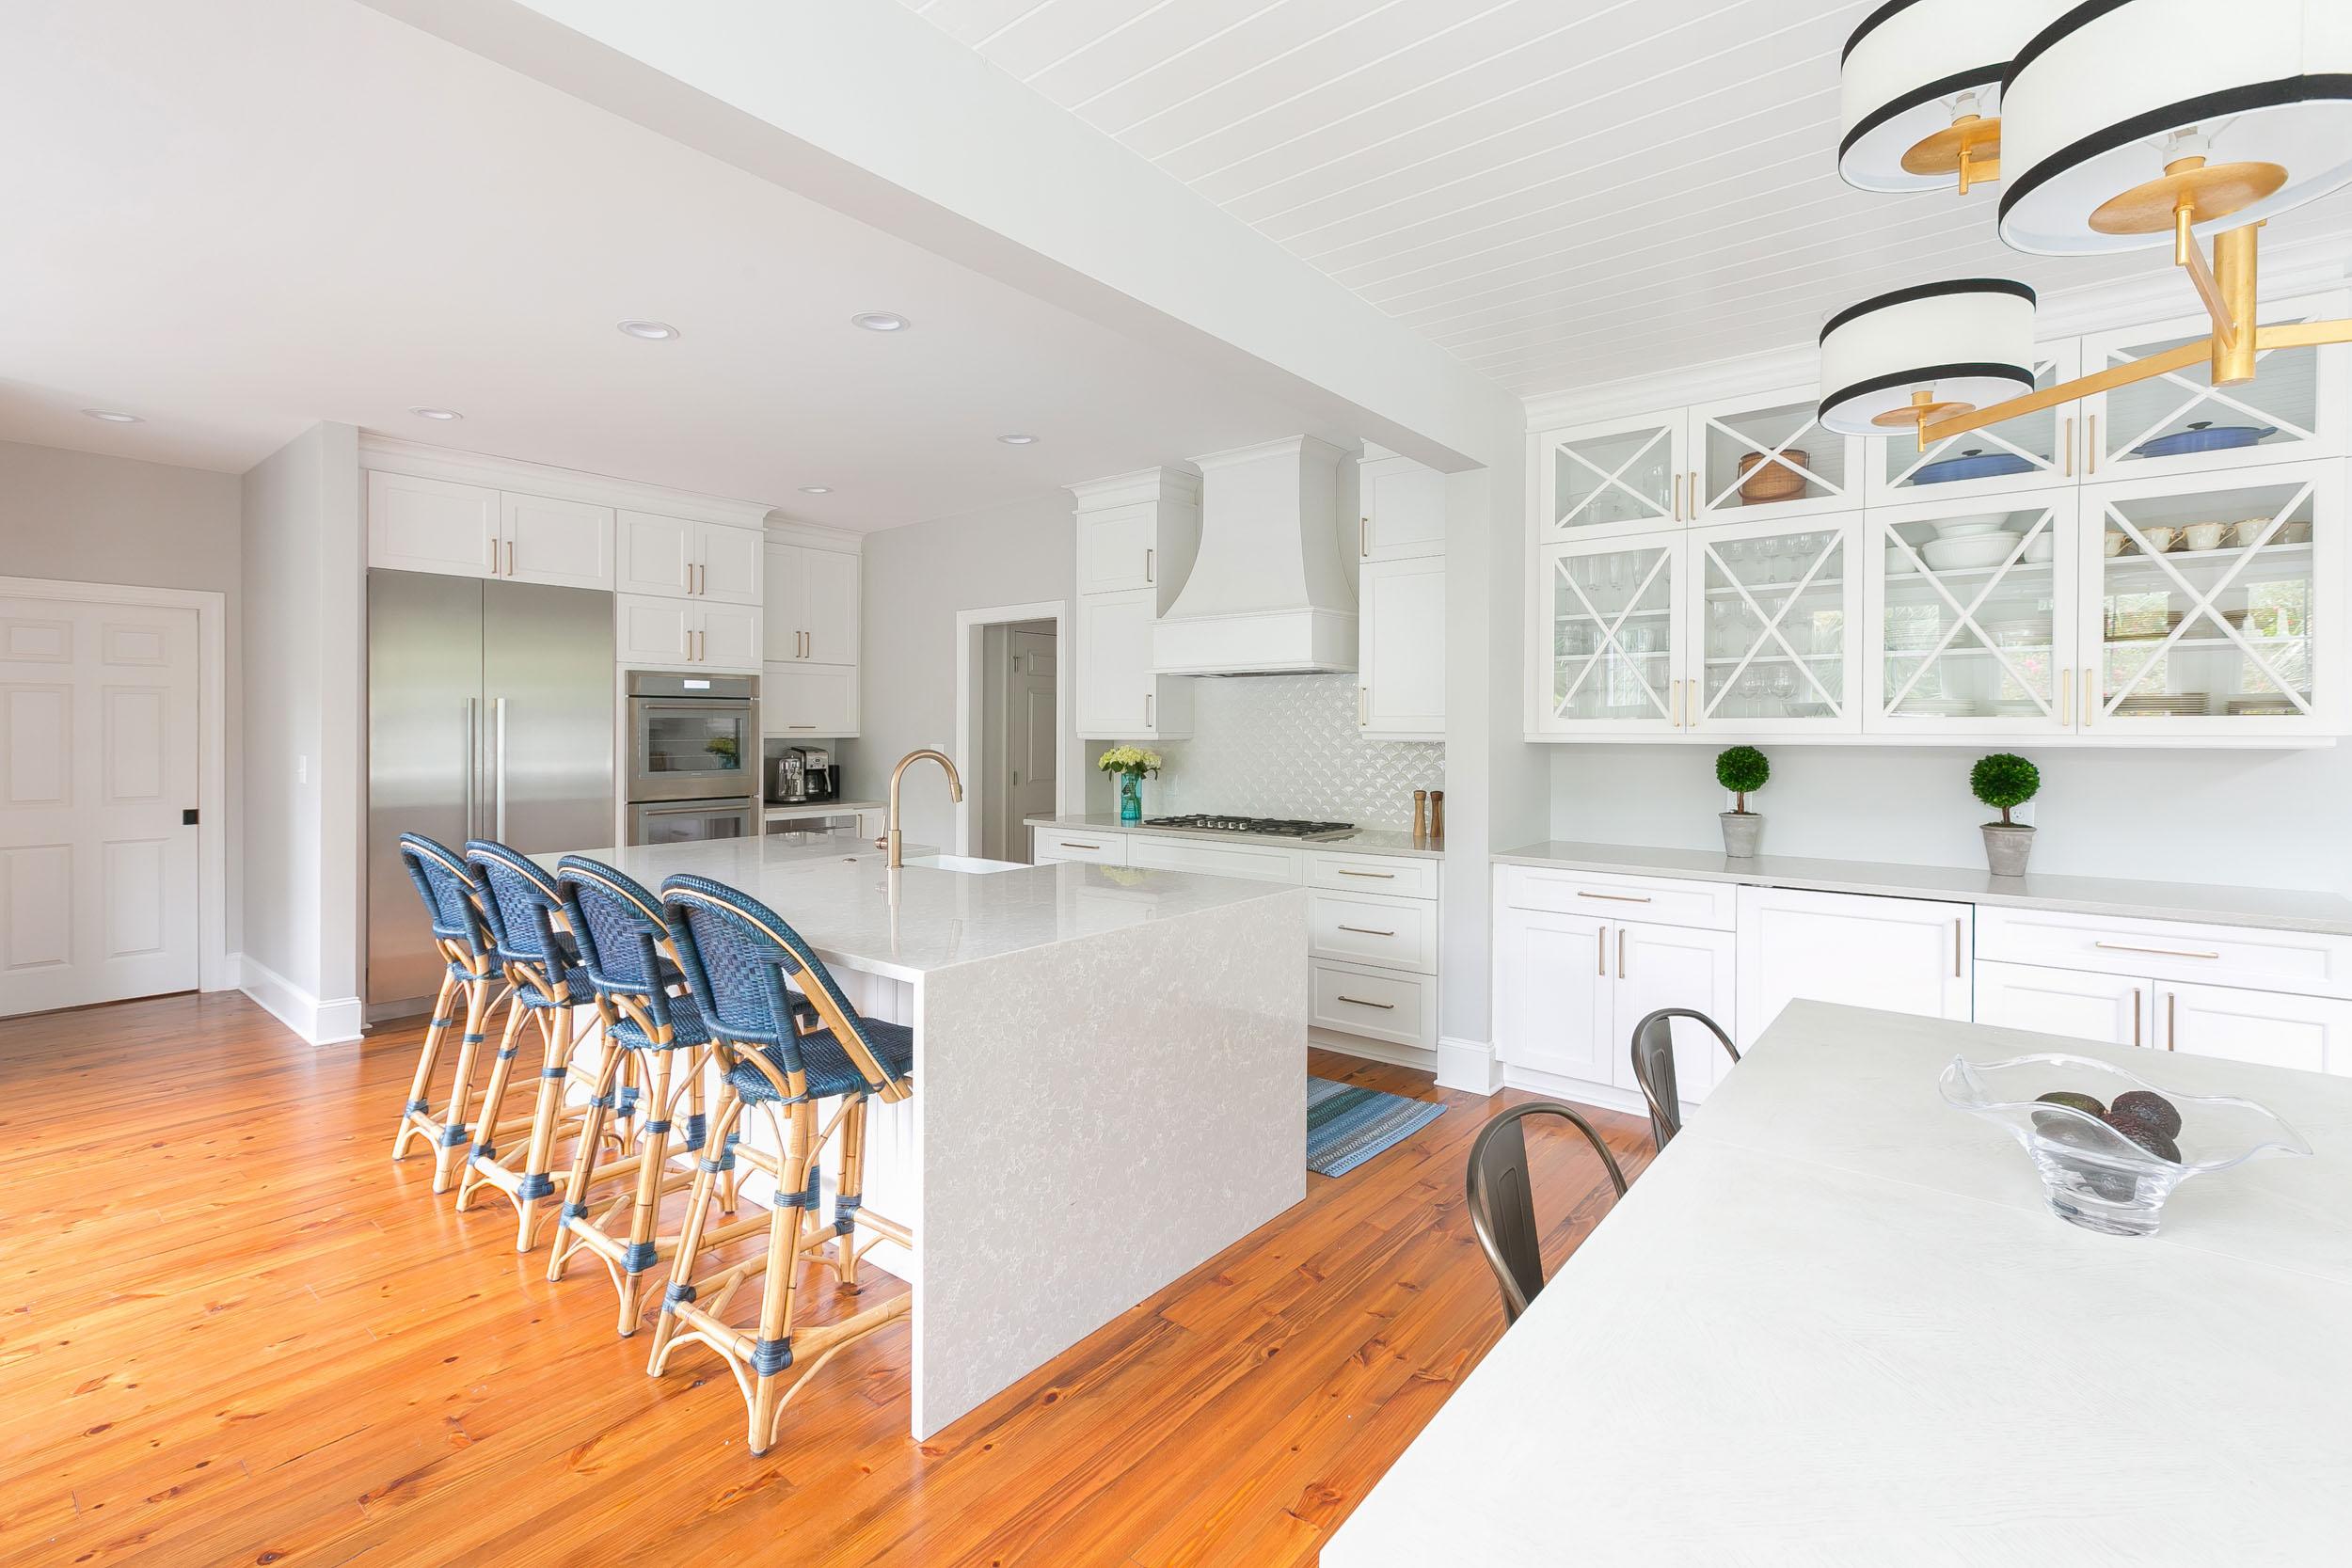 Custom kitchen with tiled backsplash, custom cabinetry and kitchen island.